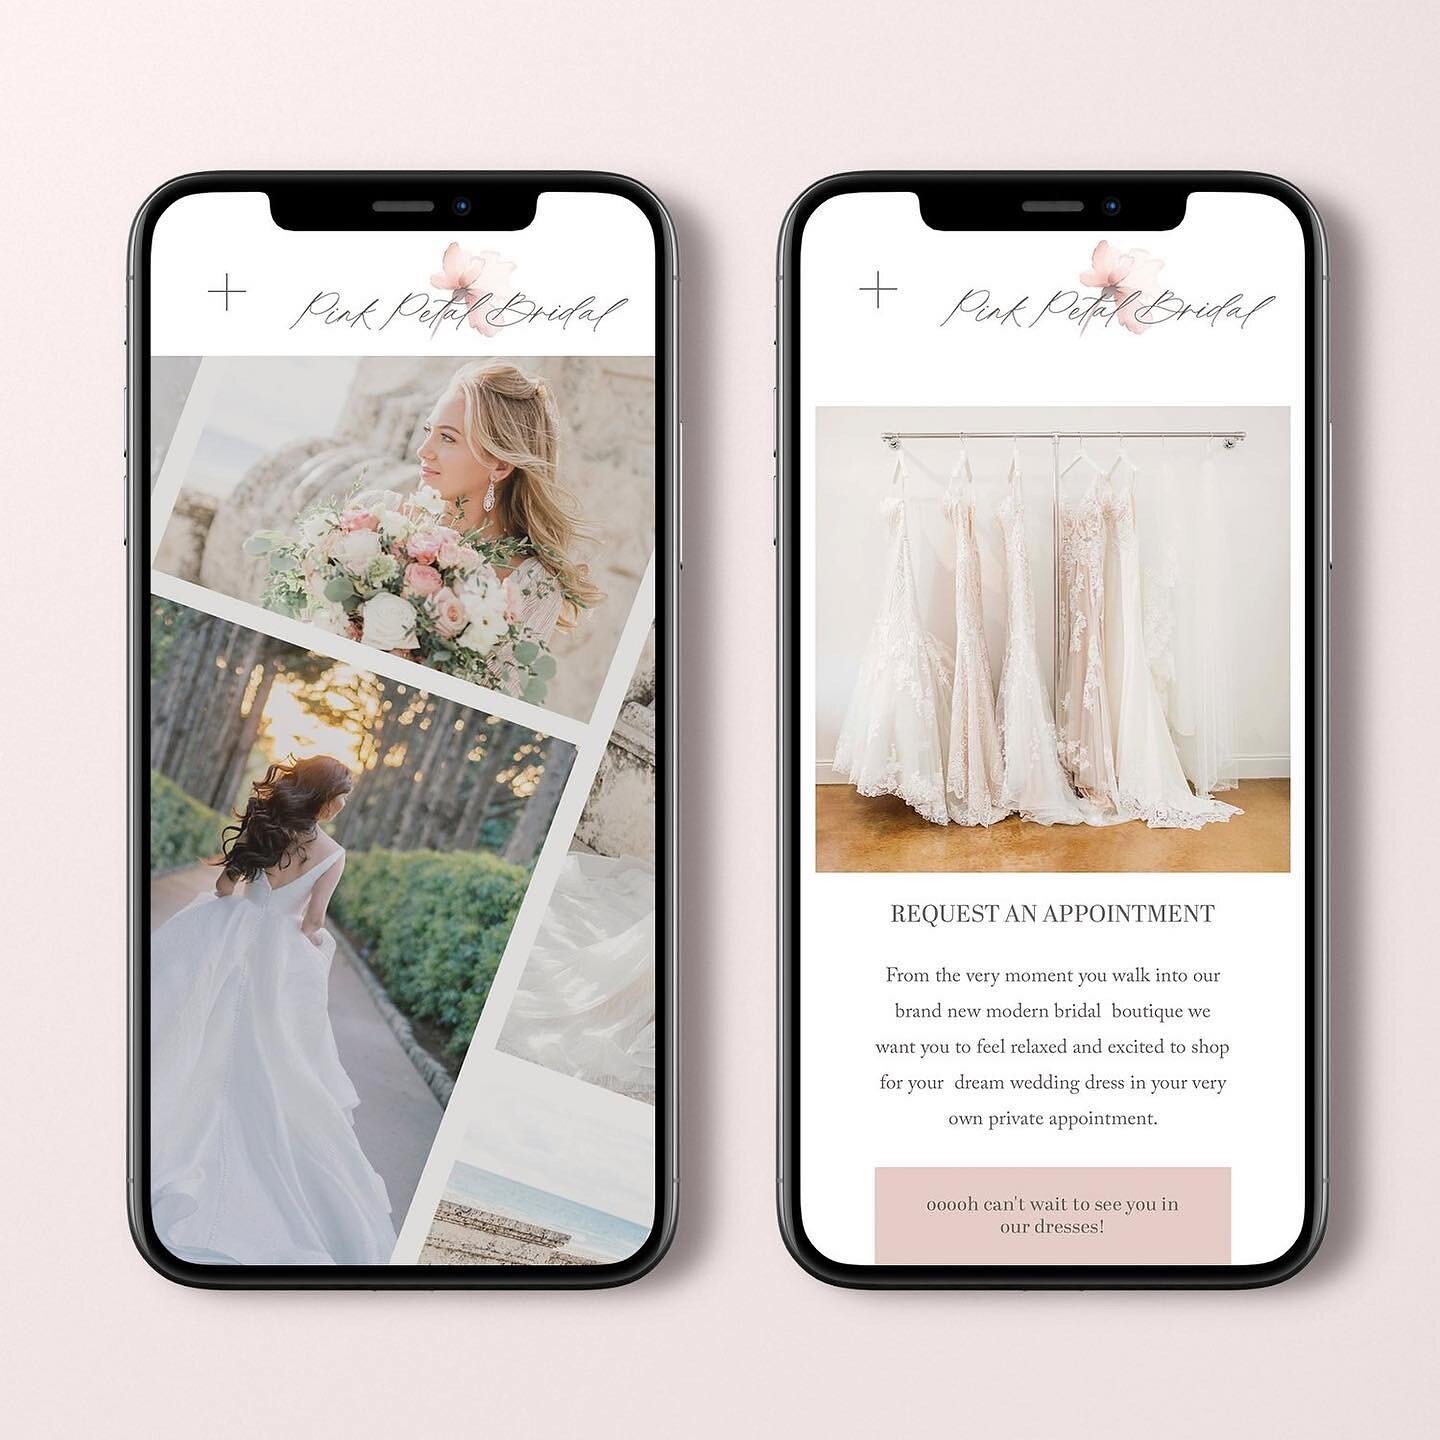 Loved designing this beautiful website for @pinkpetalbridal #jupiterfloridawedding #websitedesign